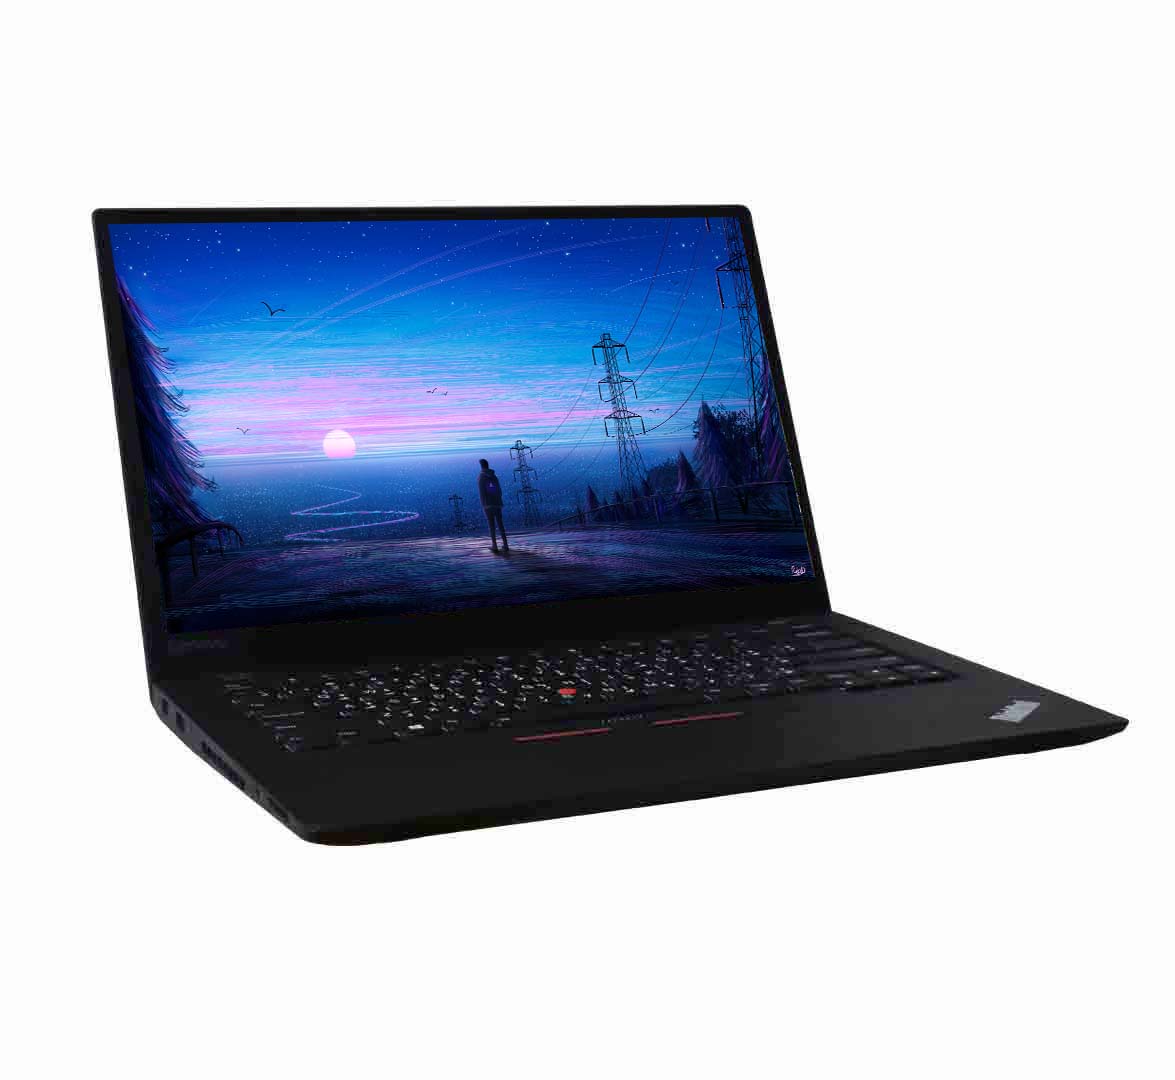 Lenovo ThinkPad T470 Business Laptop, Intel Core i7-6th Gen CPU, 8GB RAM, 256GB SSD, 14 inch Display, Windows 10 Pro